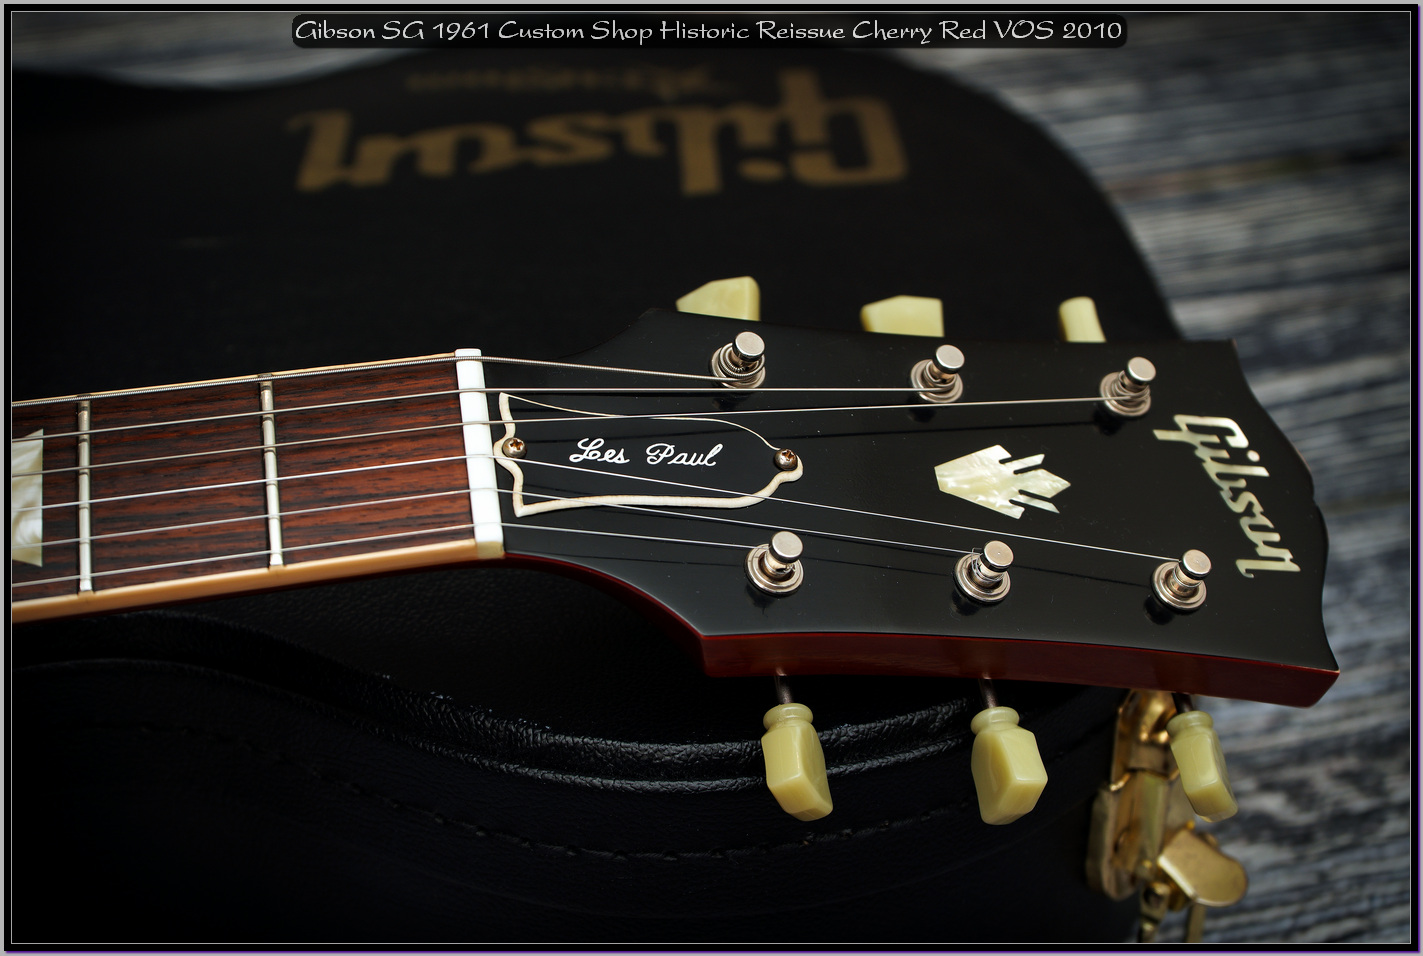 Gibson SG 1961 Custom Shop Historic Reissue Cherry Red VOS 2010 04_x1400.jpg